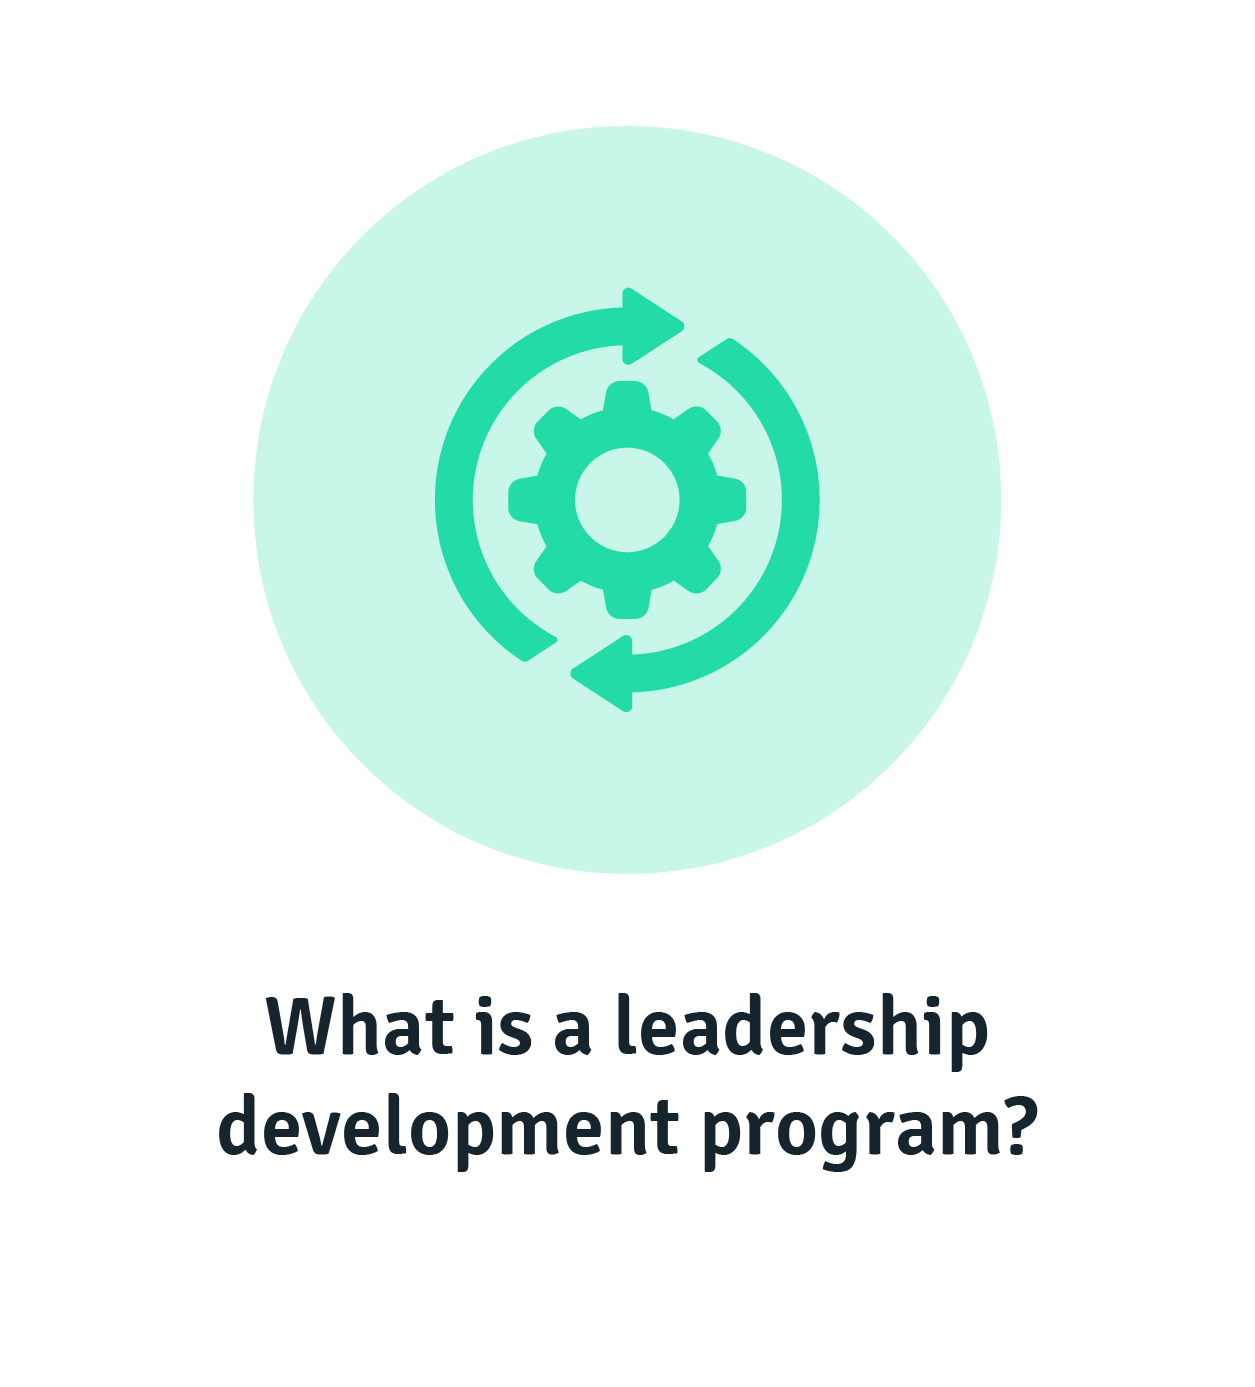 What is a leadership development program?